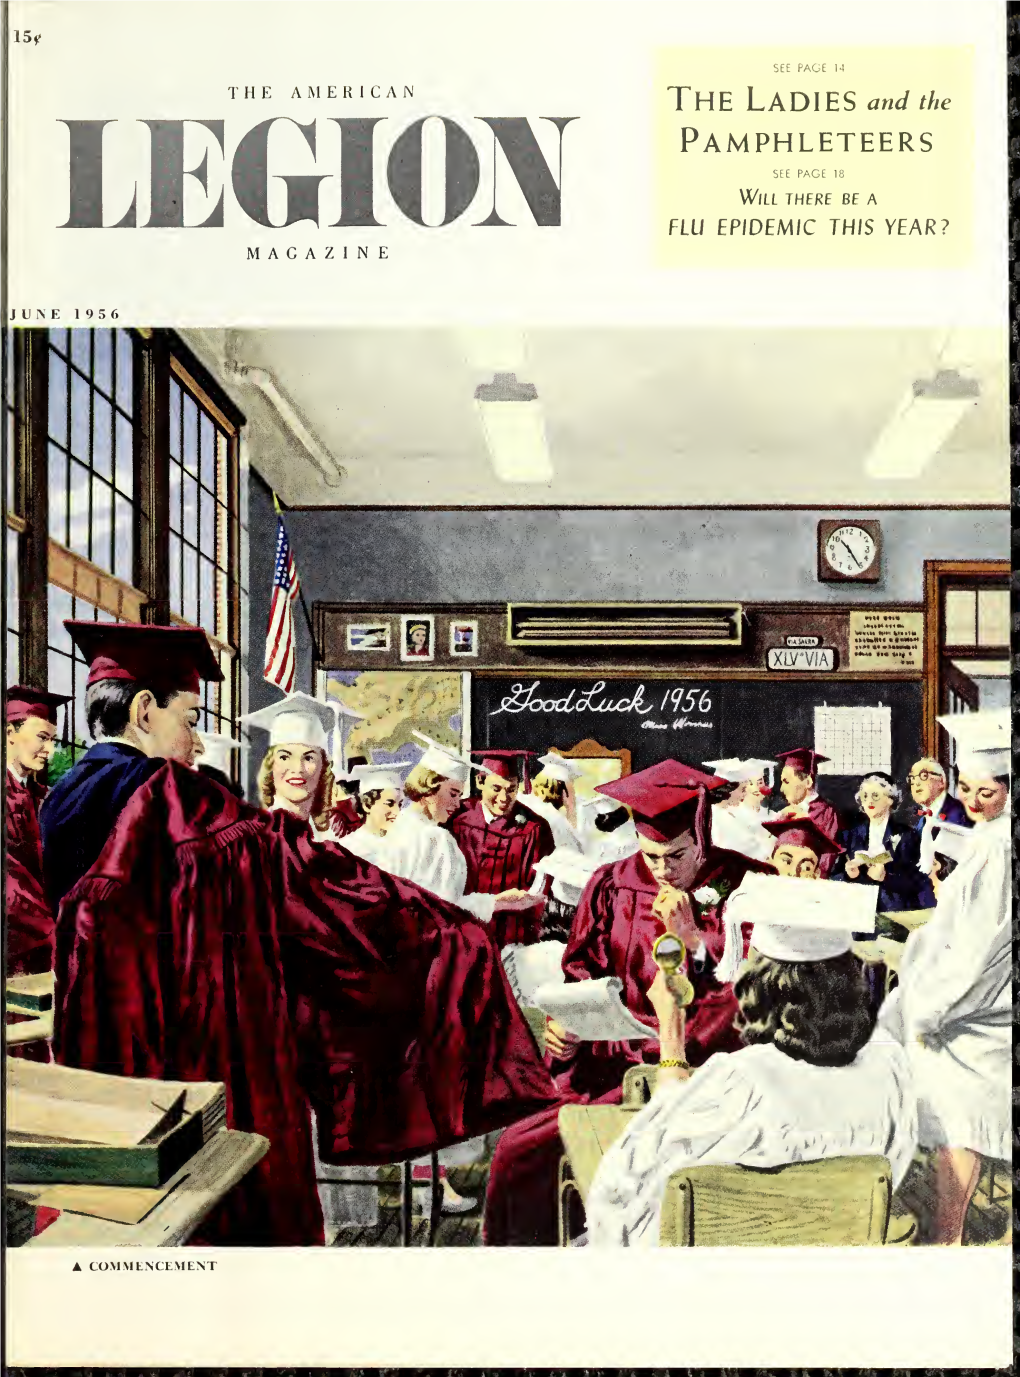 The American Legion Magazine